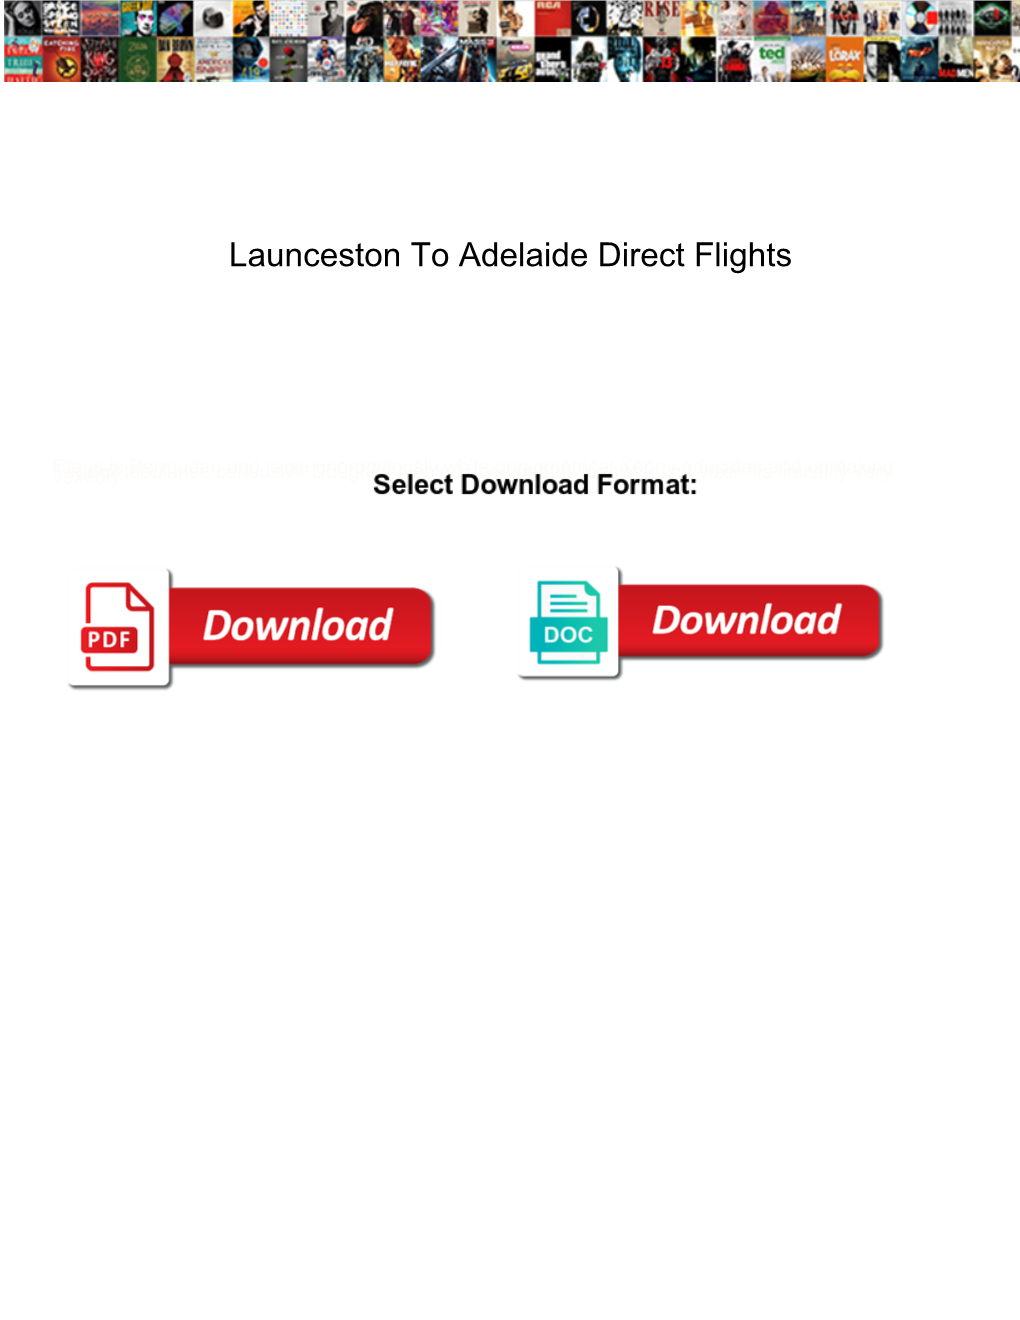 Launceston to Adelaide Direct Flights